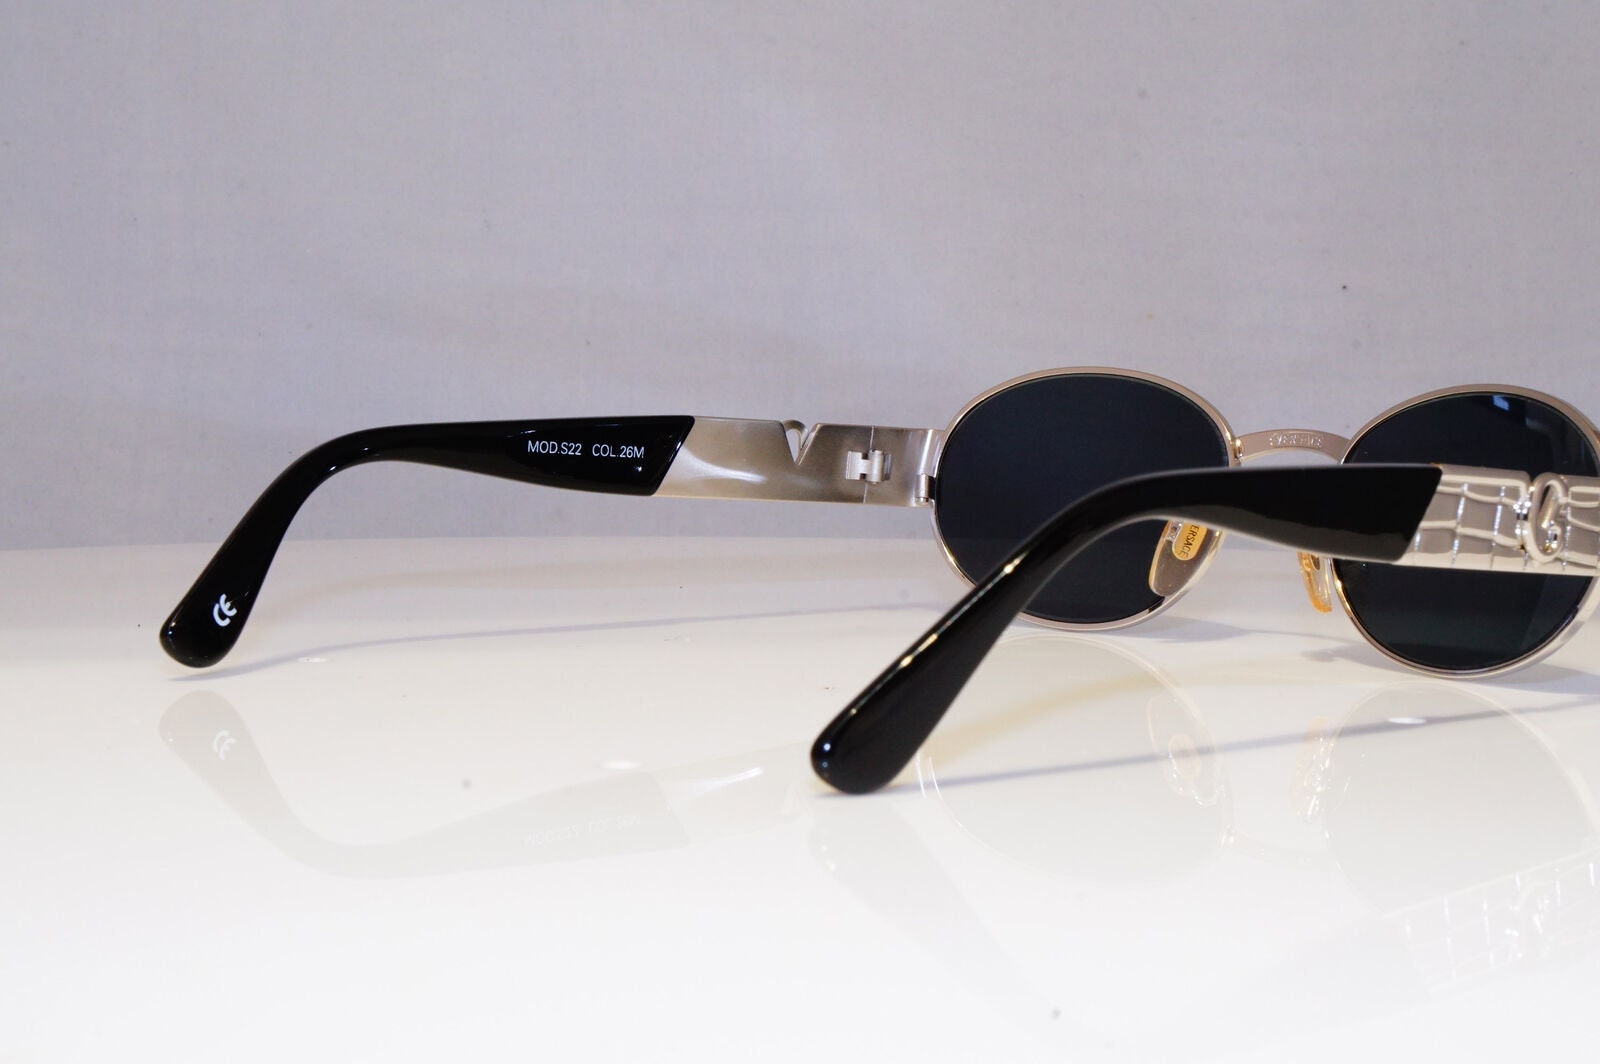 Gianni Versace Mens Womens Vintage Sunglasses Silver Mod S22 | Etsy